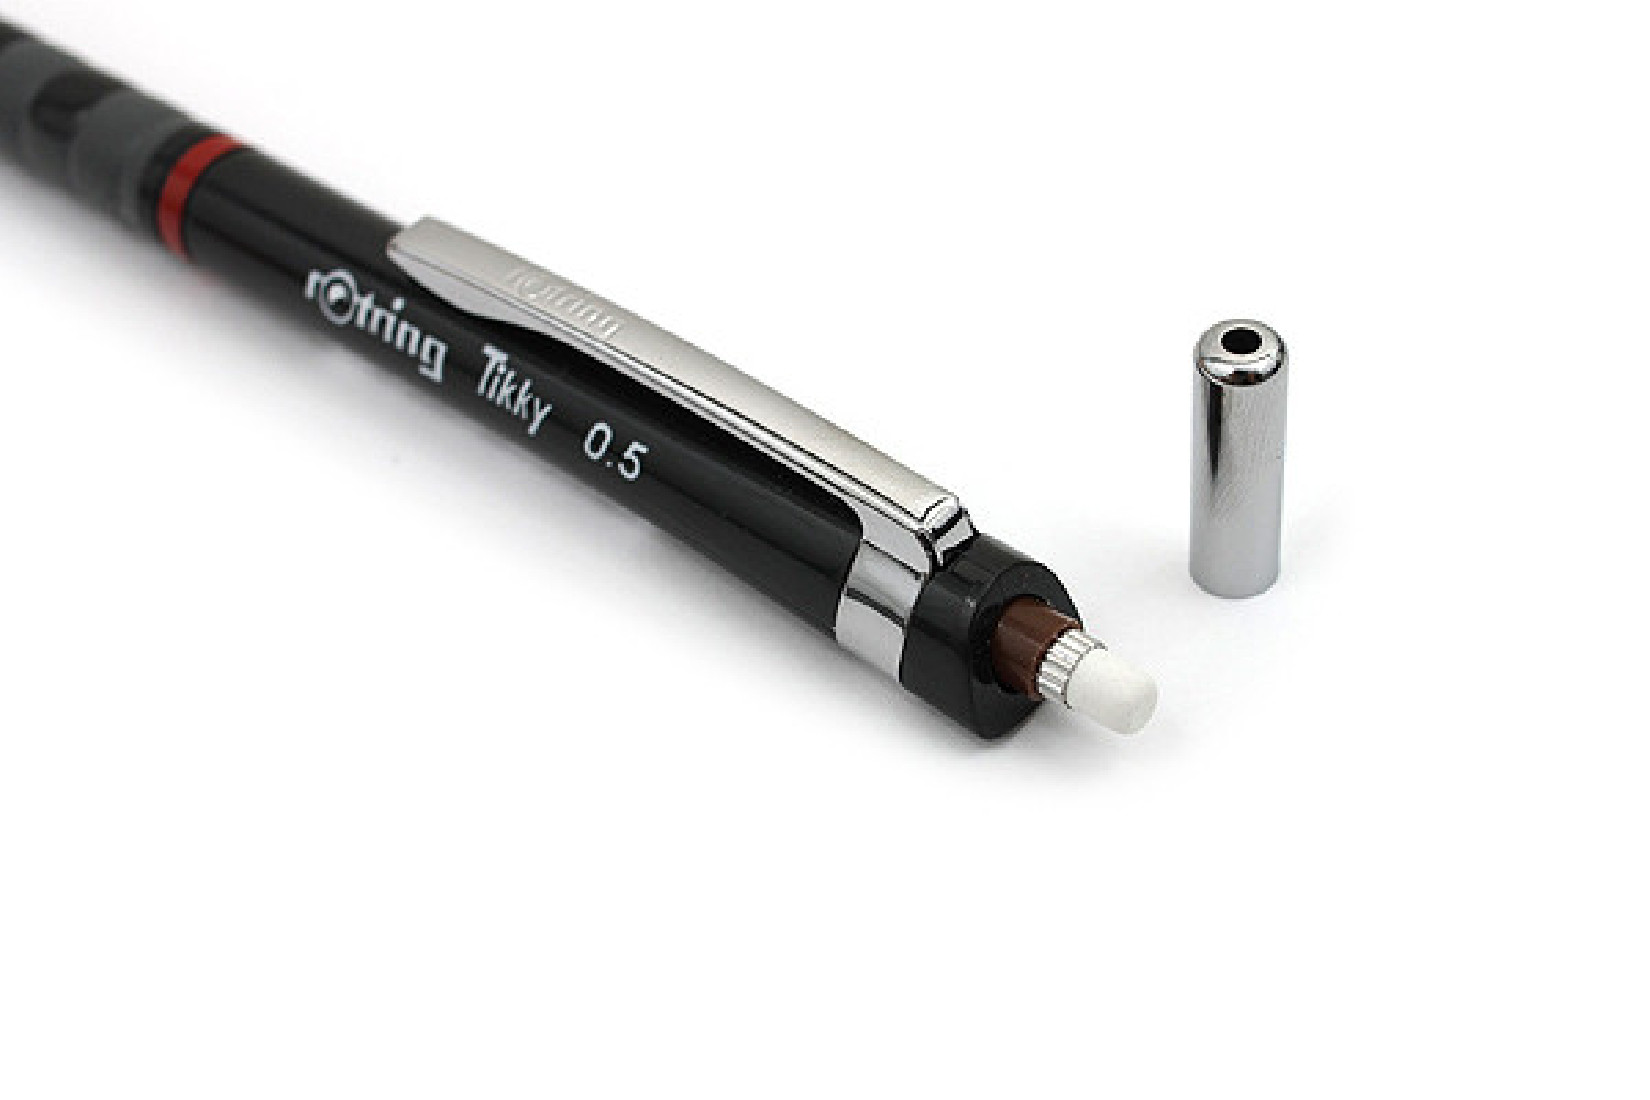 Rotring Tikky 0.5mm Black 1904700 Mechanical Pencil